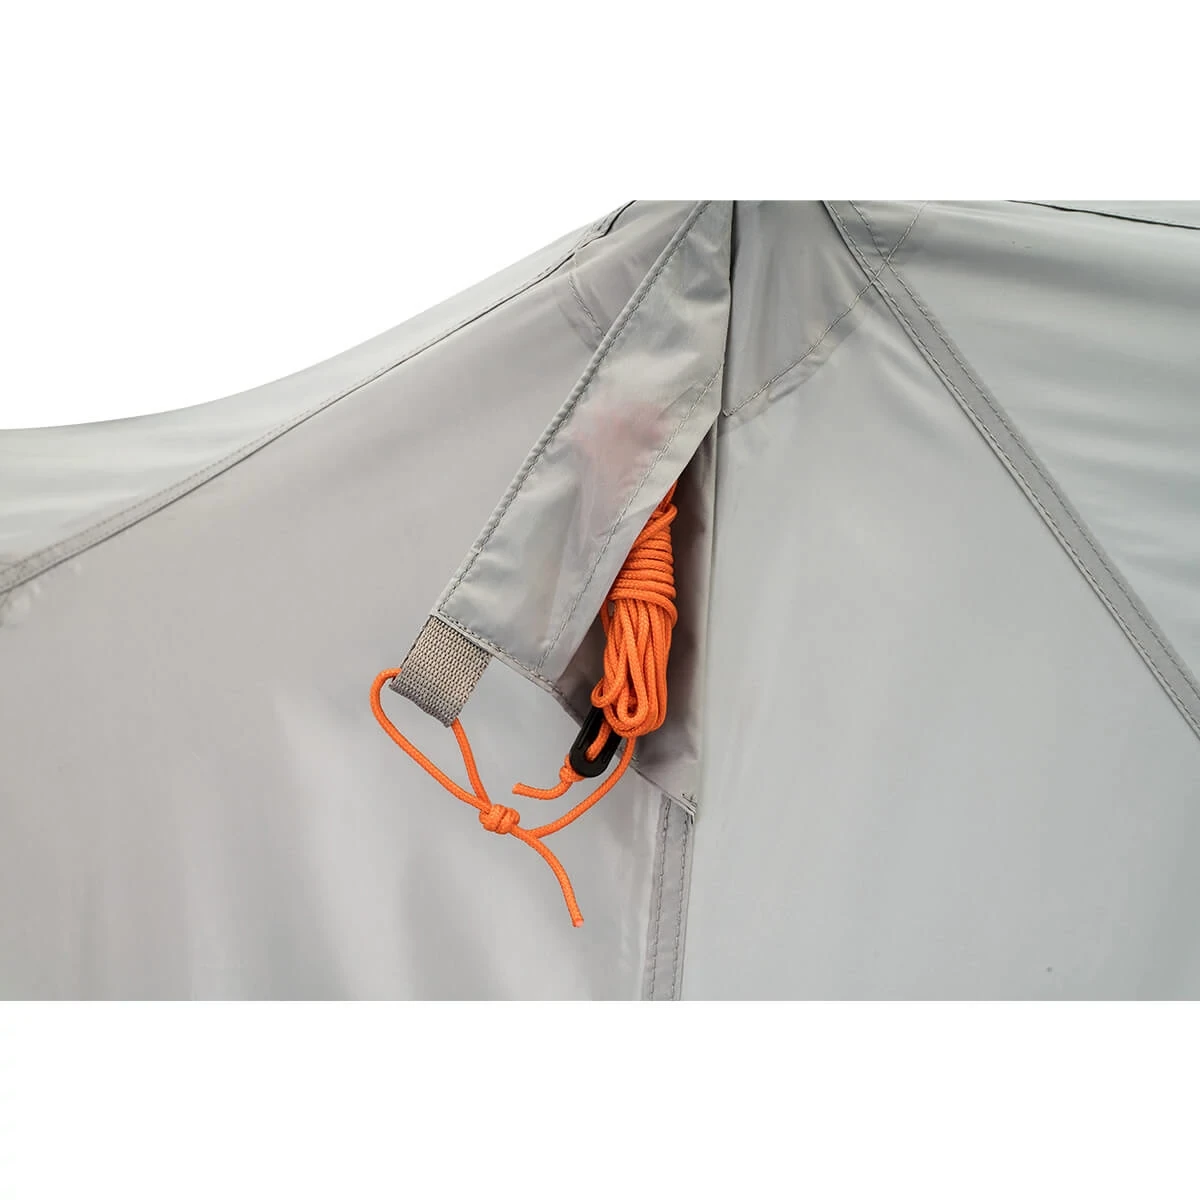 Jade Canyon X4 tent guyline pocket